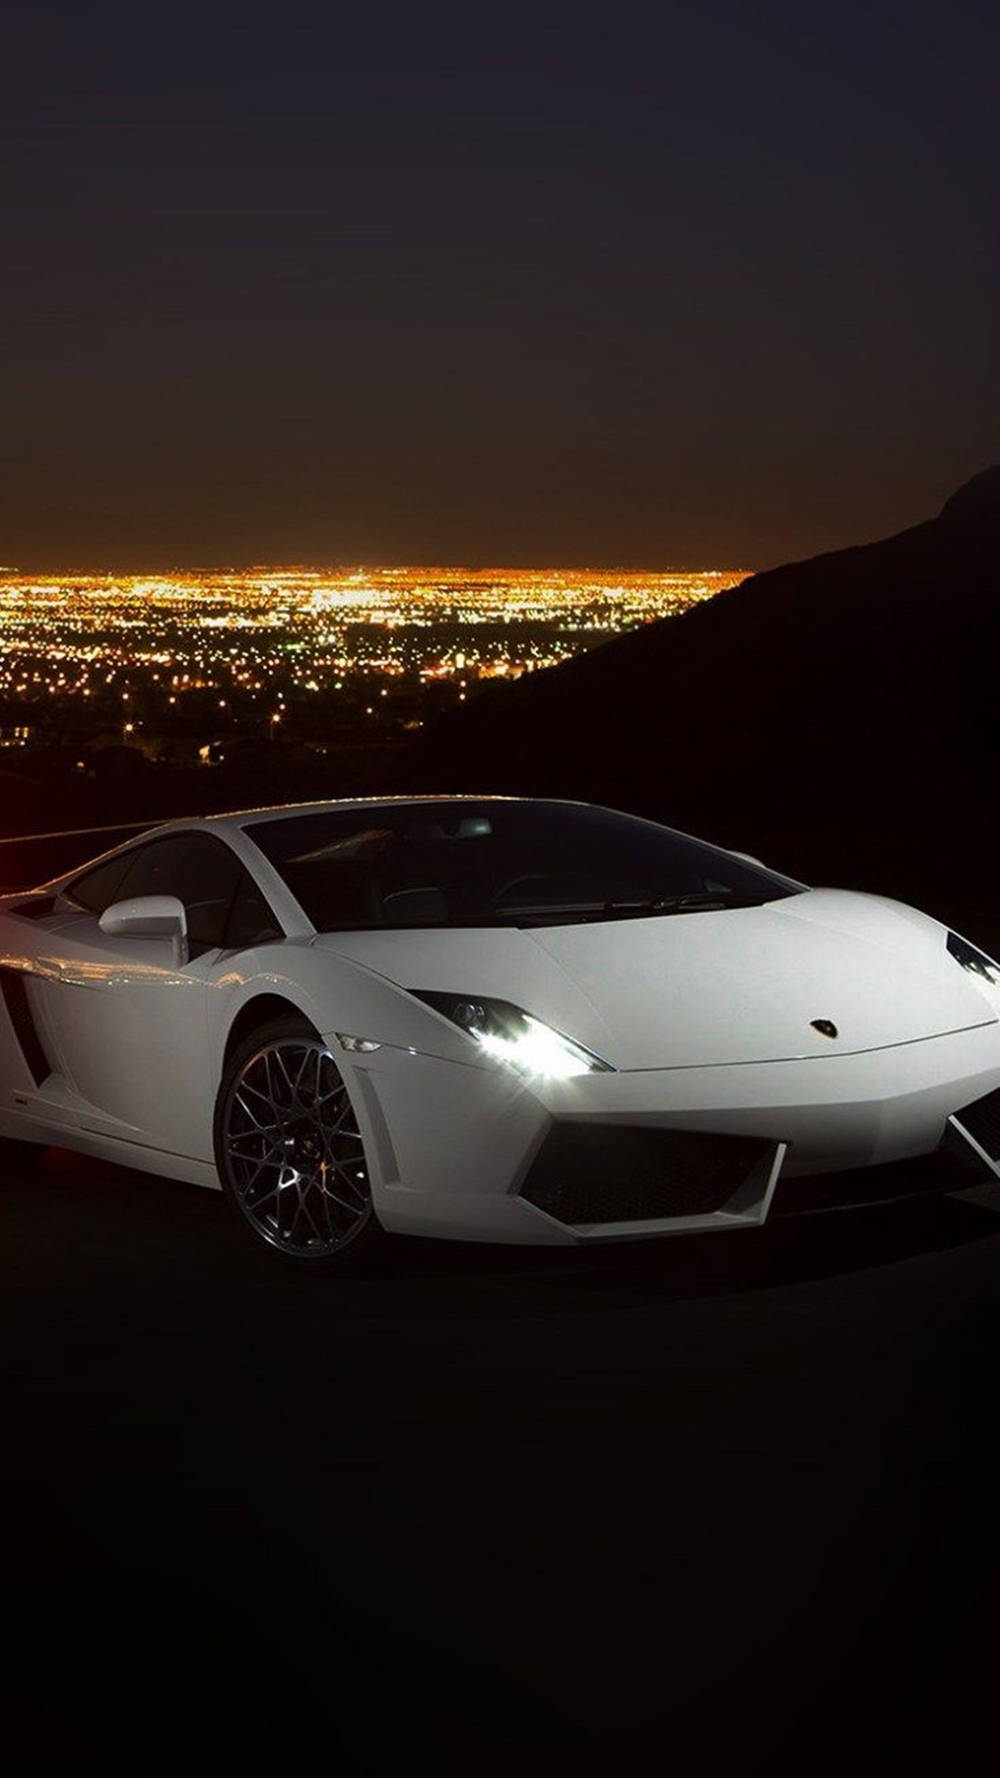 Stunning View For Iphone Lamborghini Display